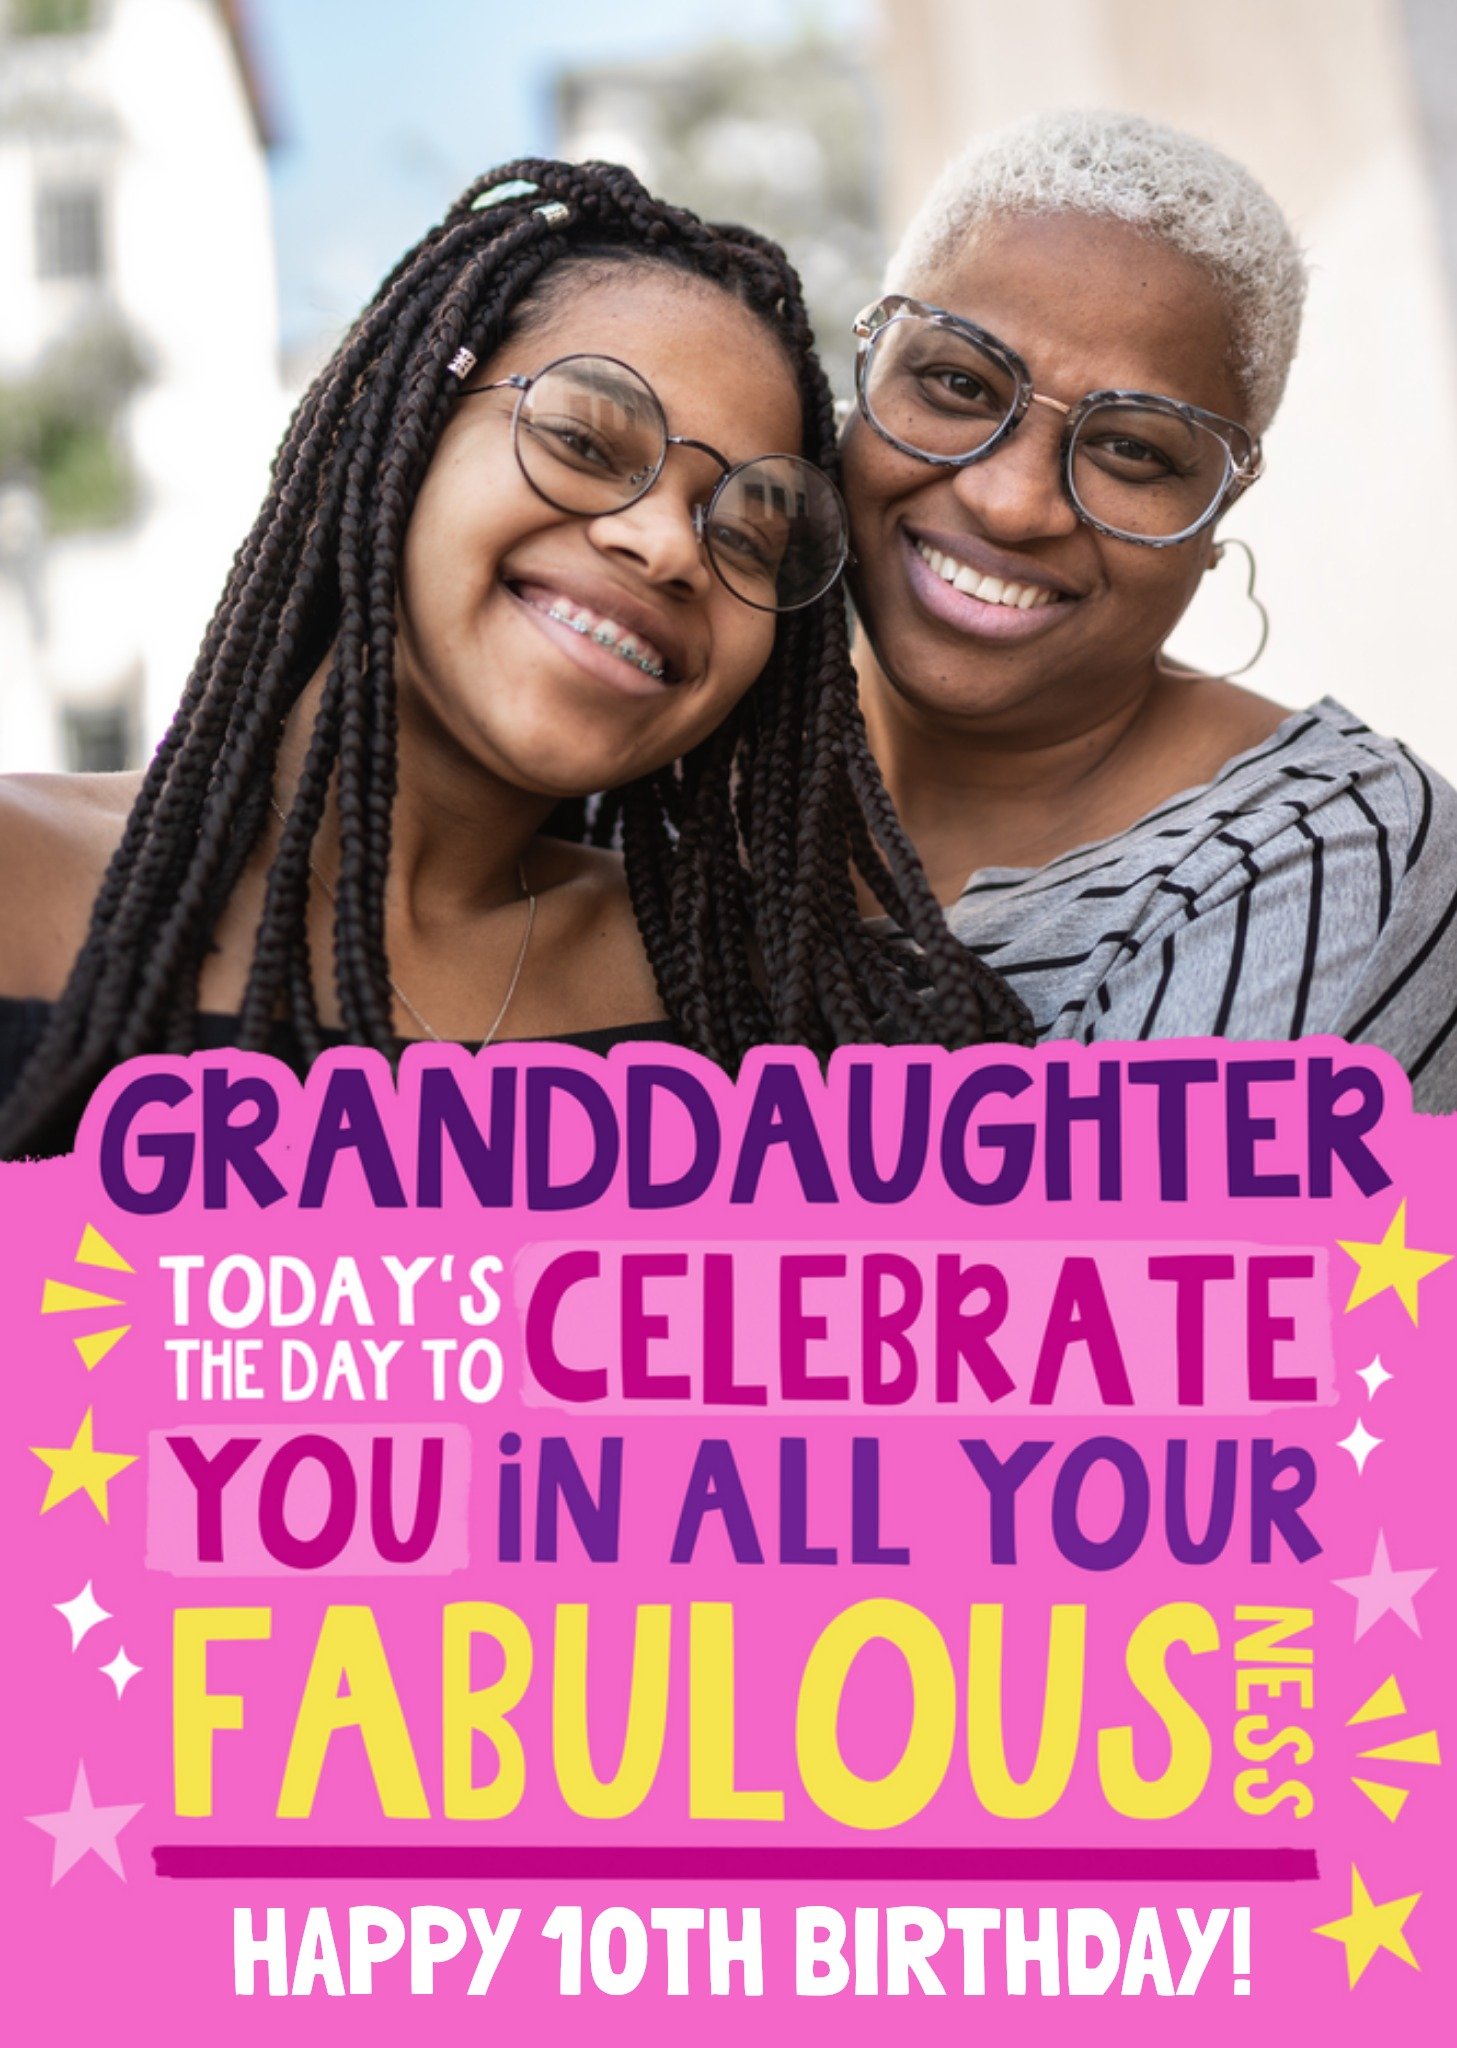 Moonpig Fabulous Granddaughter Photo Upload Birthday Card, Large